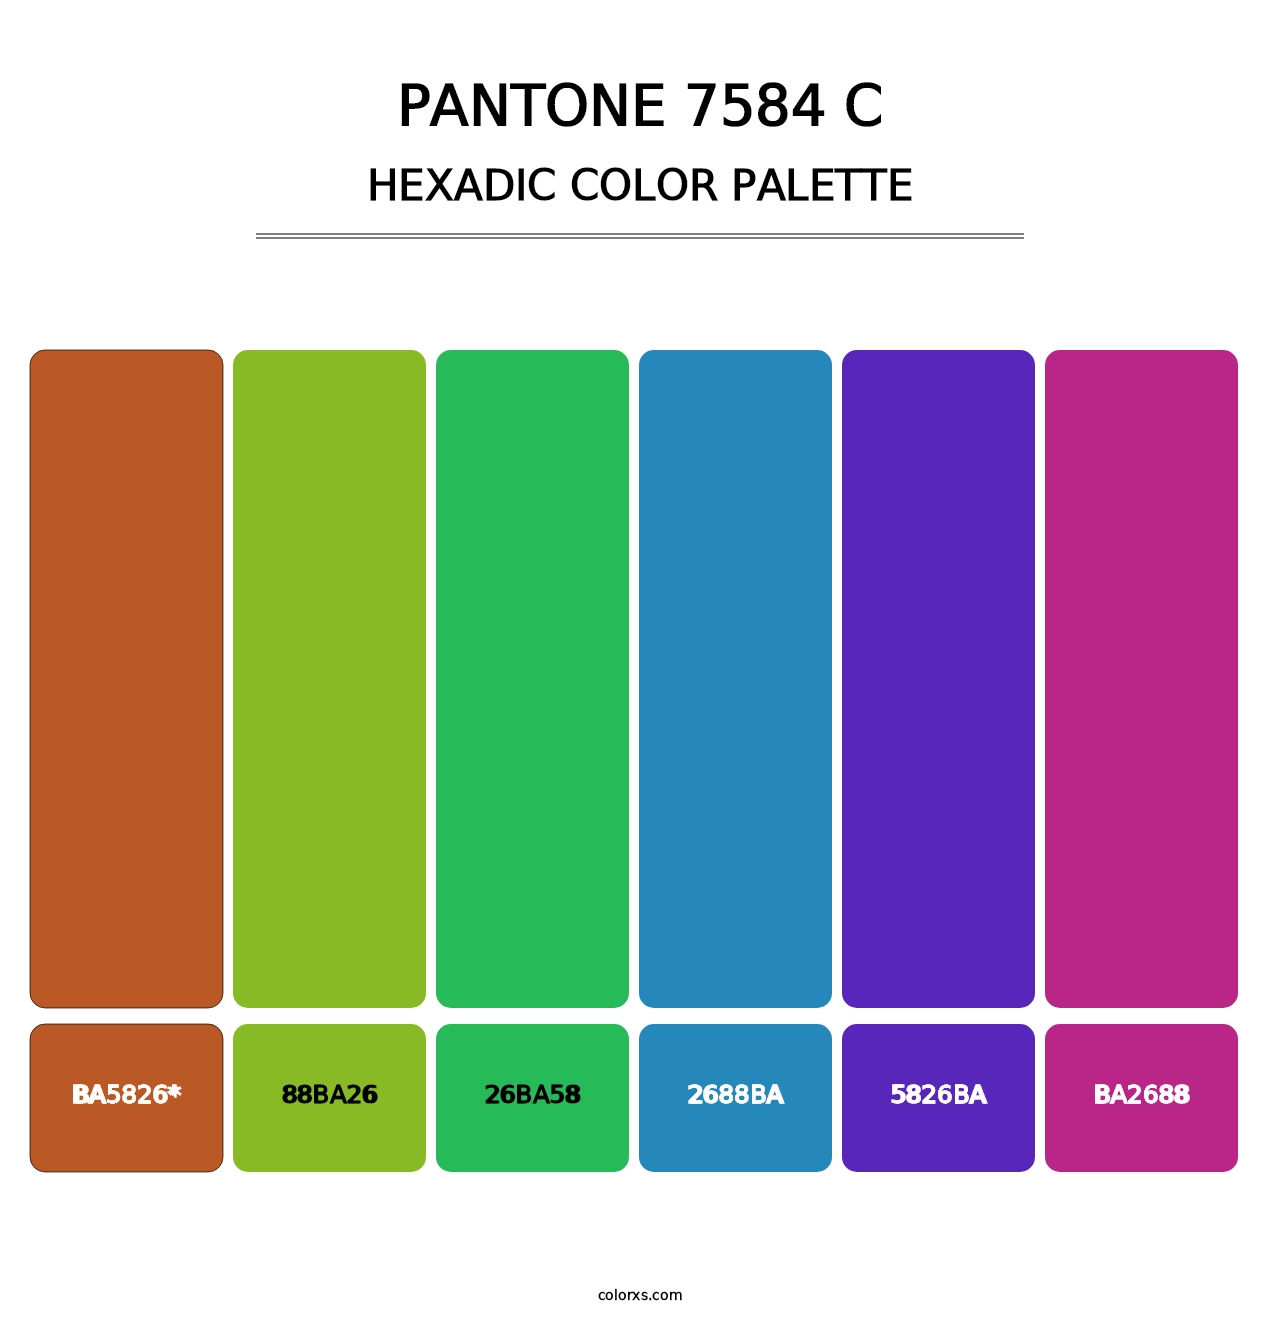 PANTONE 7584 C - Hexadic Color Palette